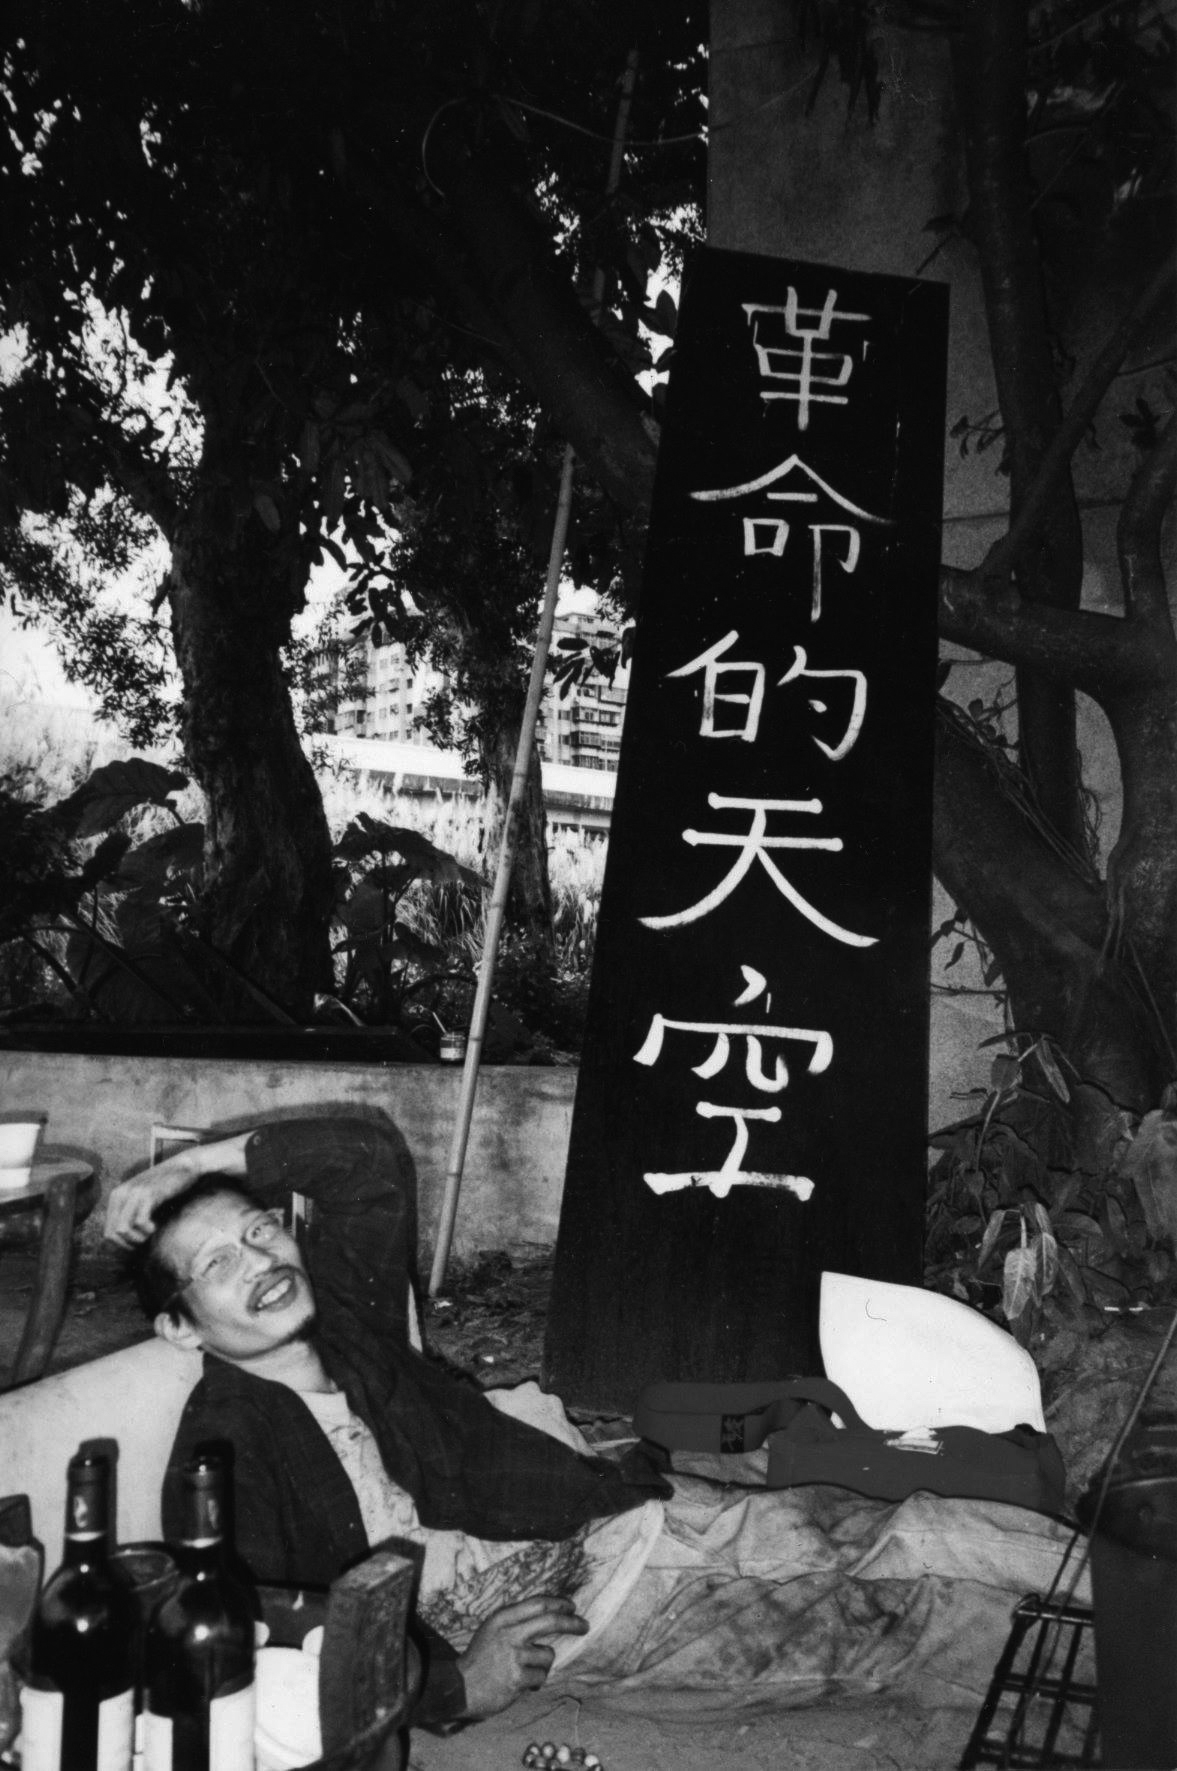 Wu Chung-Wei sitting next to a sign that reads “Revolutionary Skies” (革命的天空), at Huashan Arts District, Taipei, 2000. Photo Yao Jui-Chung.